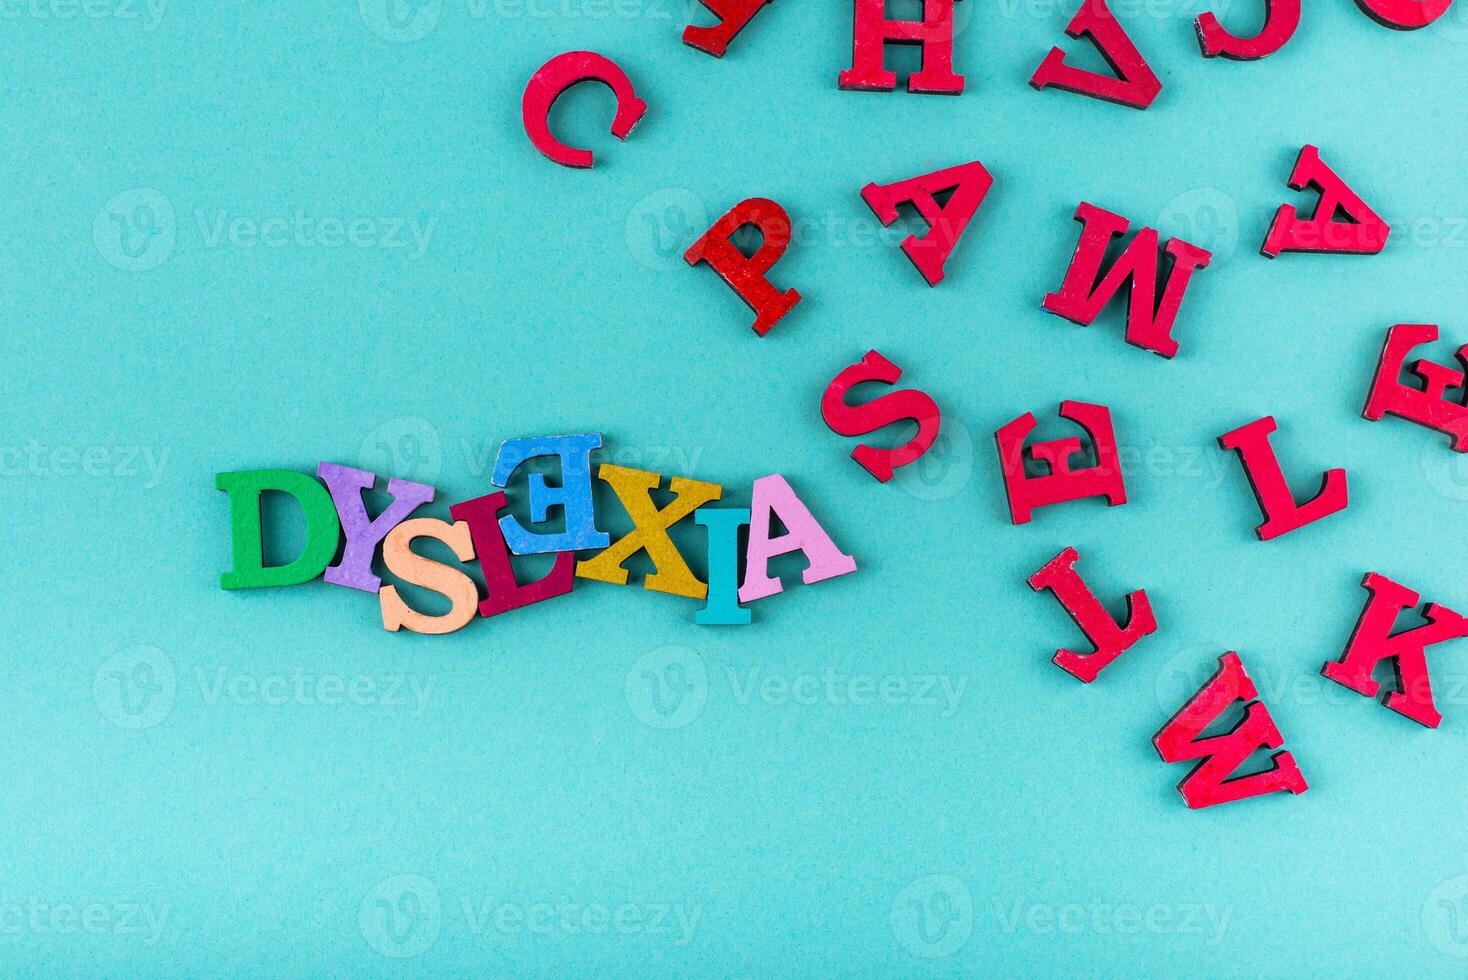 dyslexi medvetenhet begrepp med brev foto